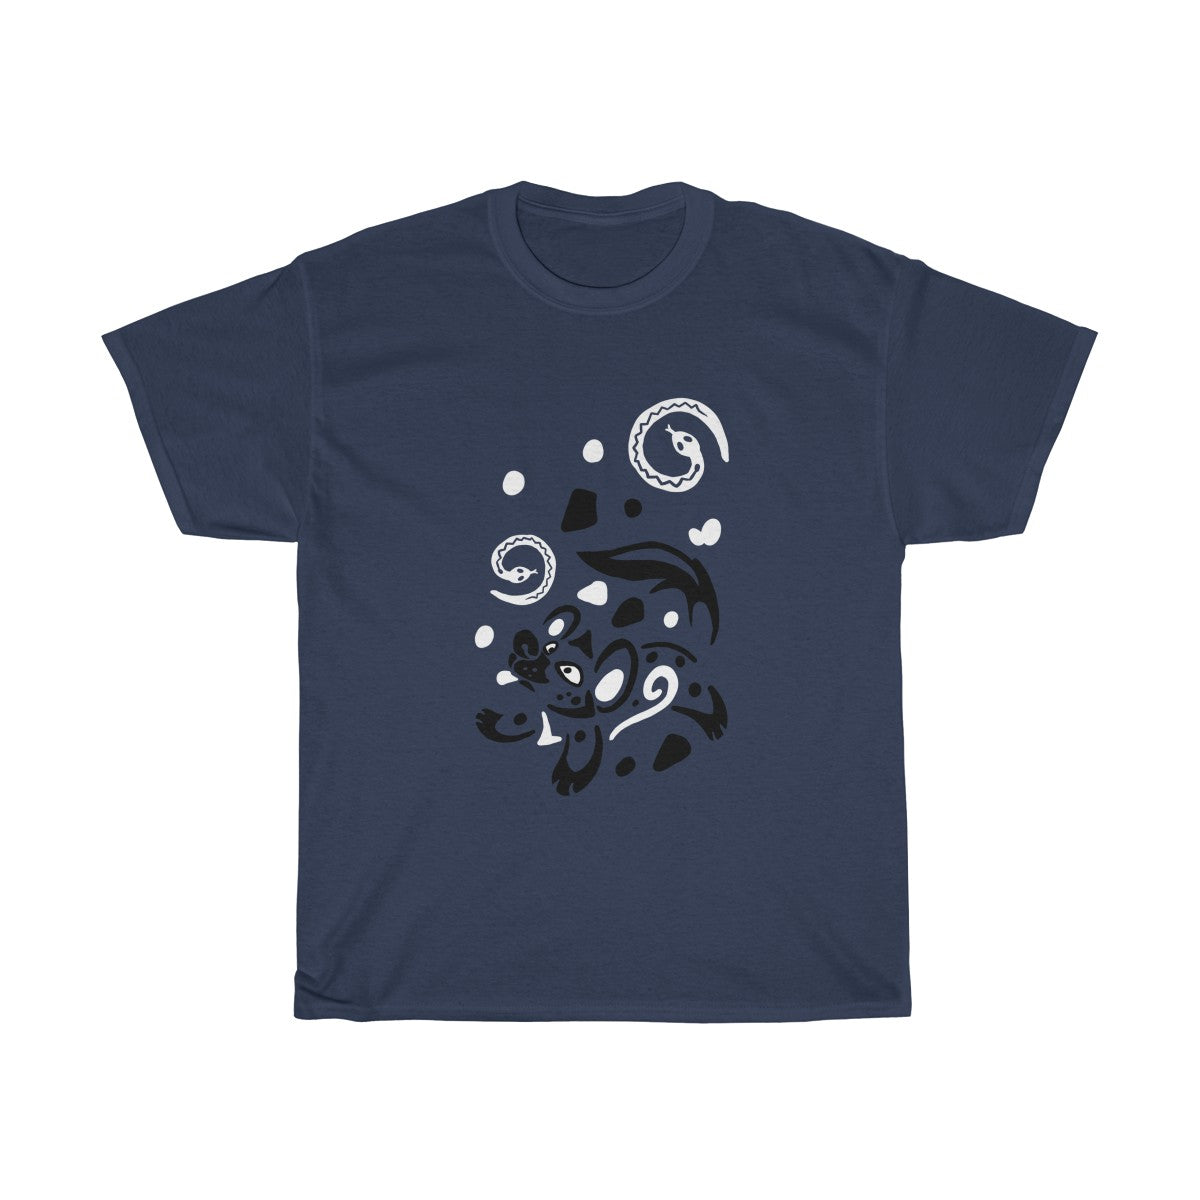 Yeens & Sneks - T-Shirts T-Shirt Dire Creatures Navy Blue S 